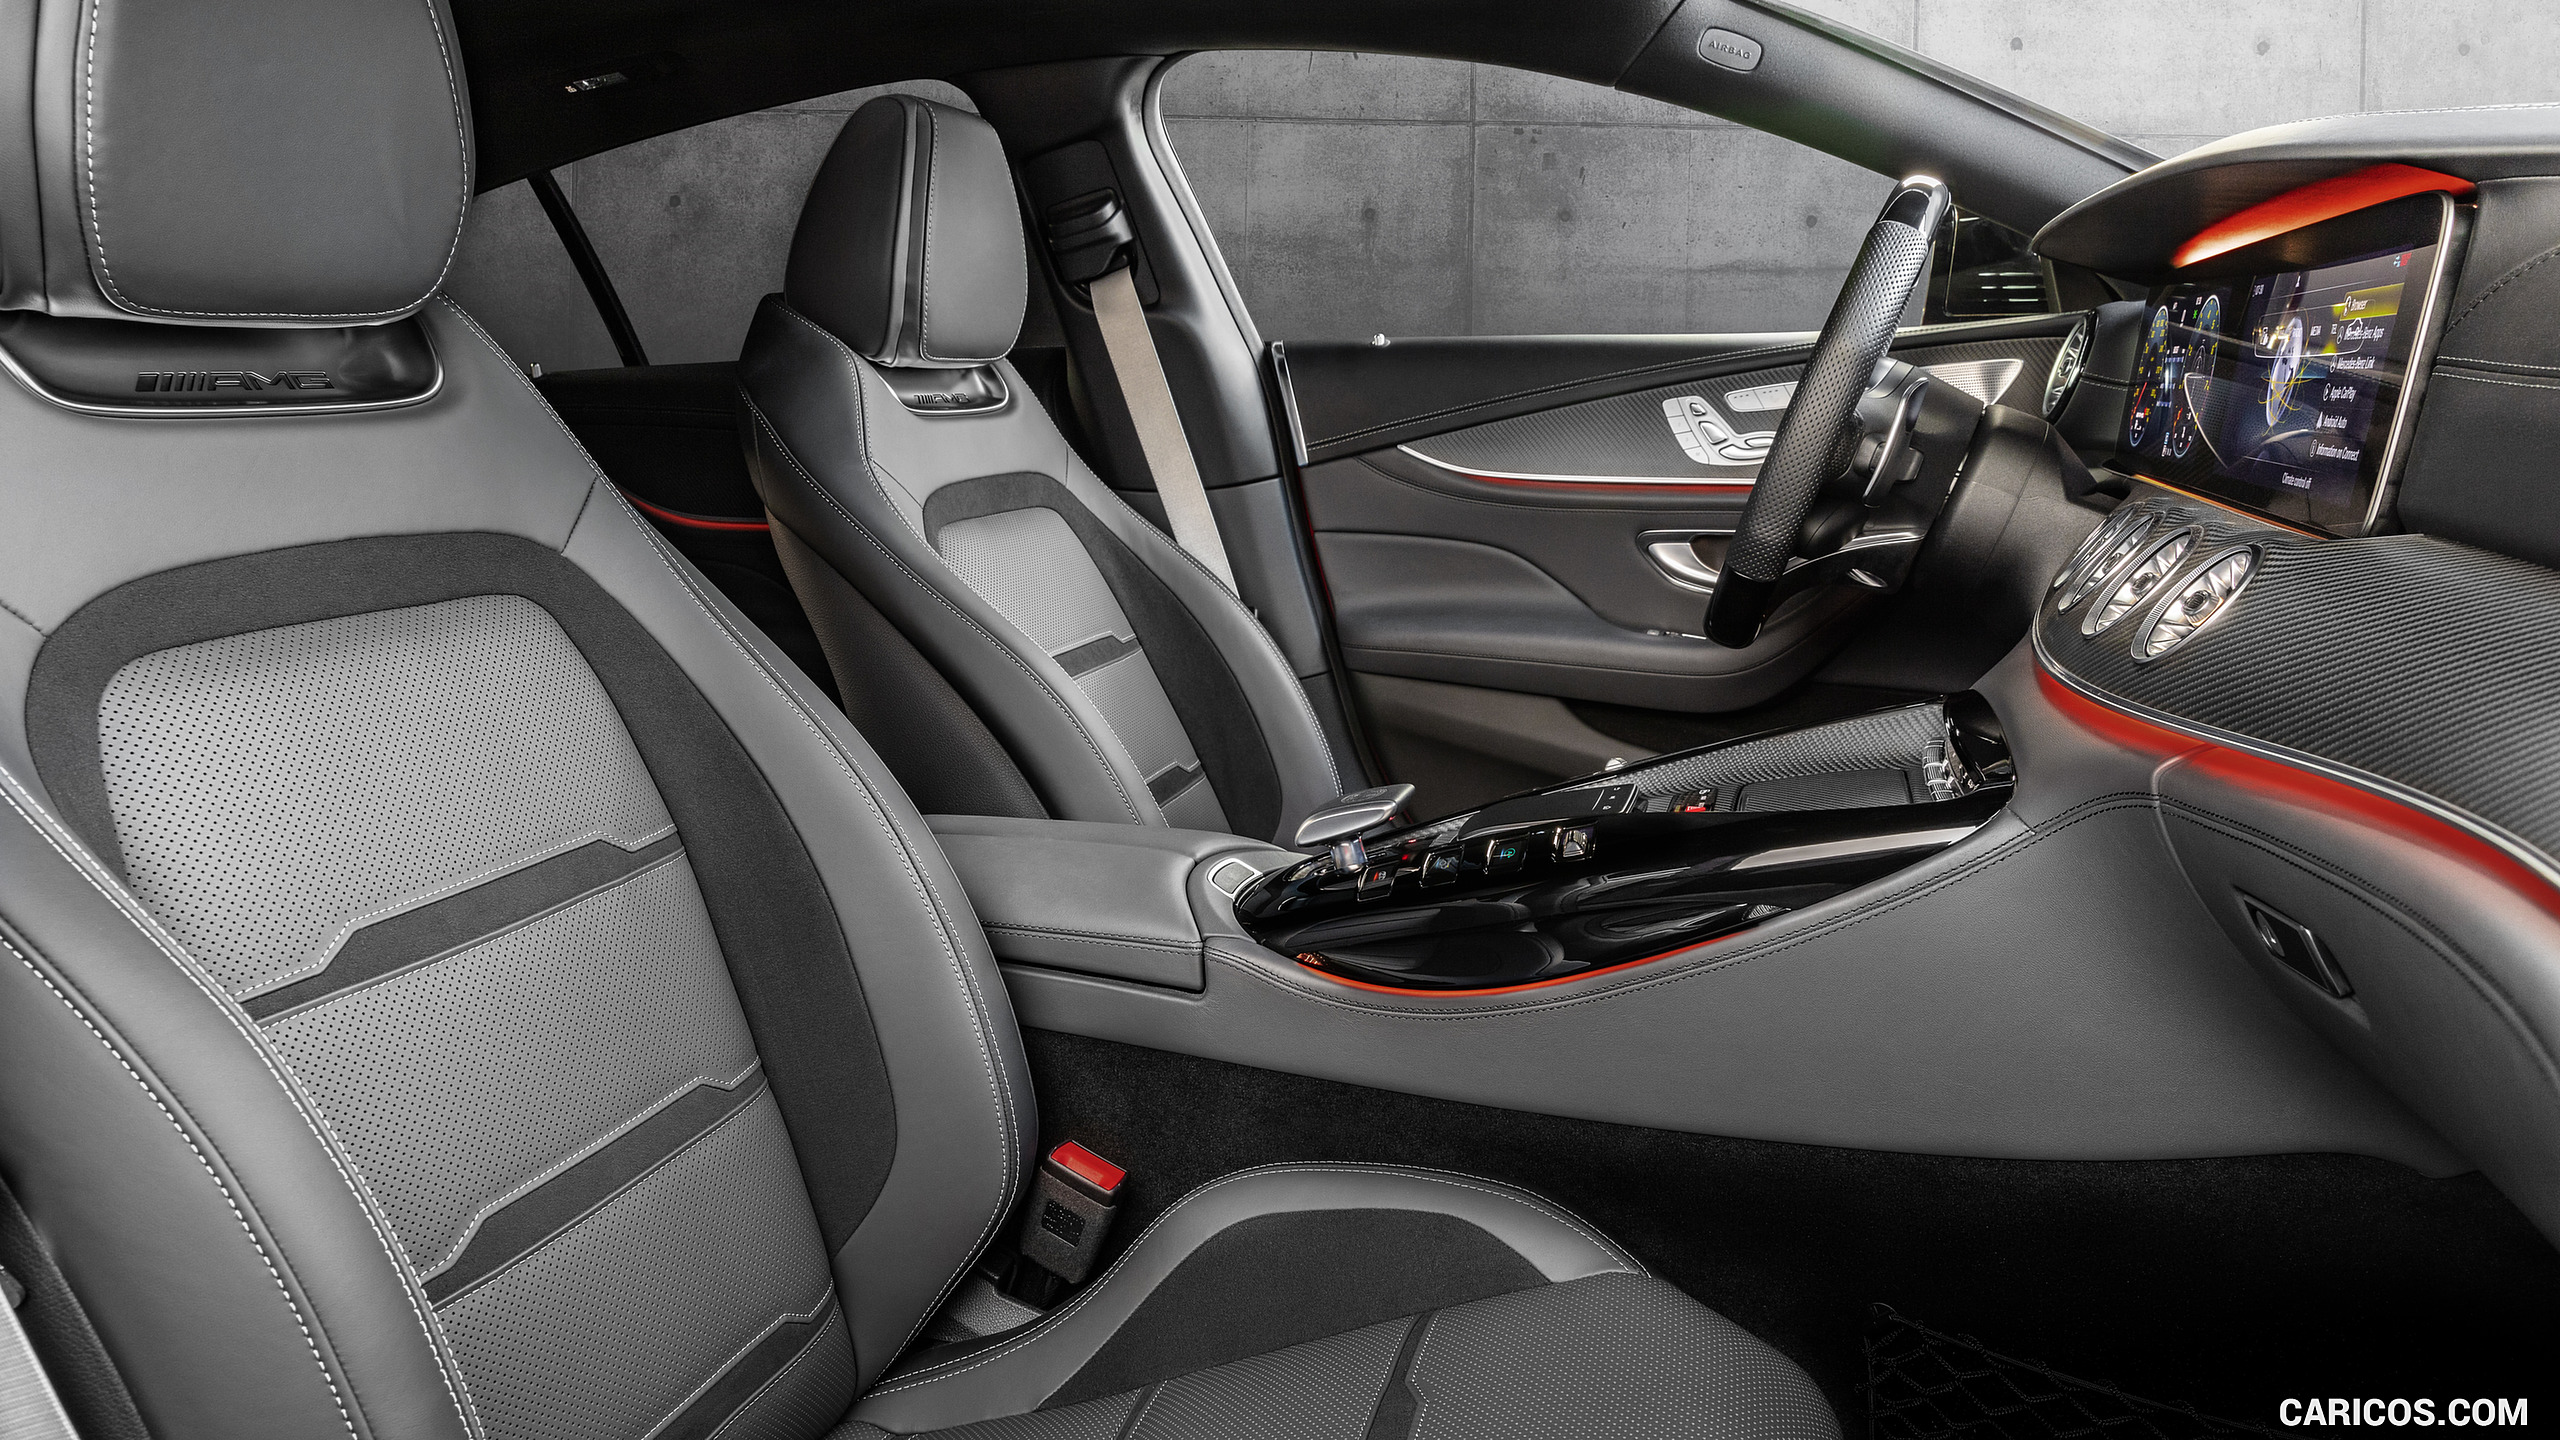 2019 Mercedes-AMG GT 43 4MATIC+ 4-Door Coupé - Interior, Front Seats, #16 of 16